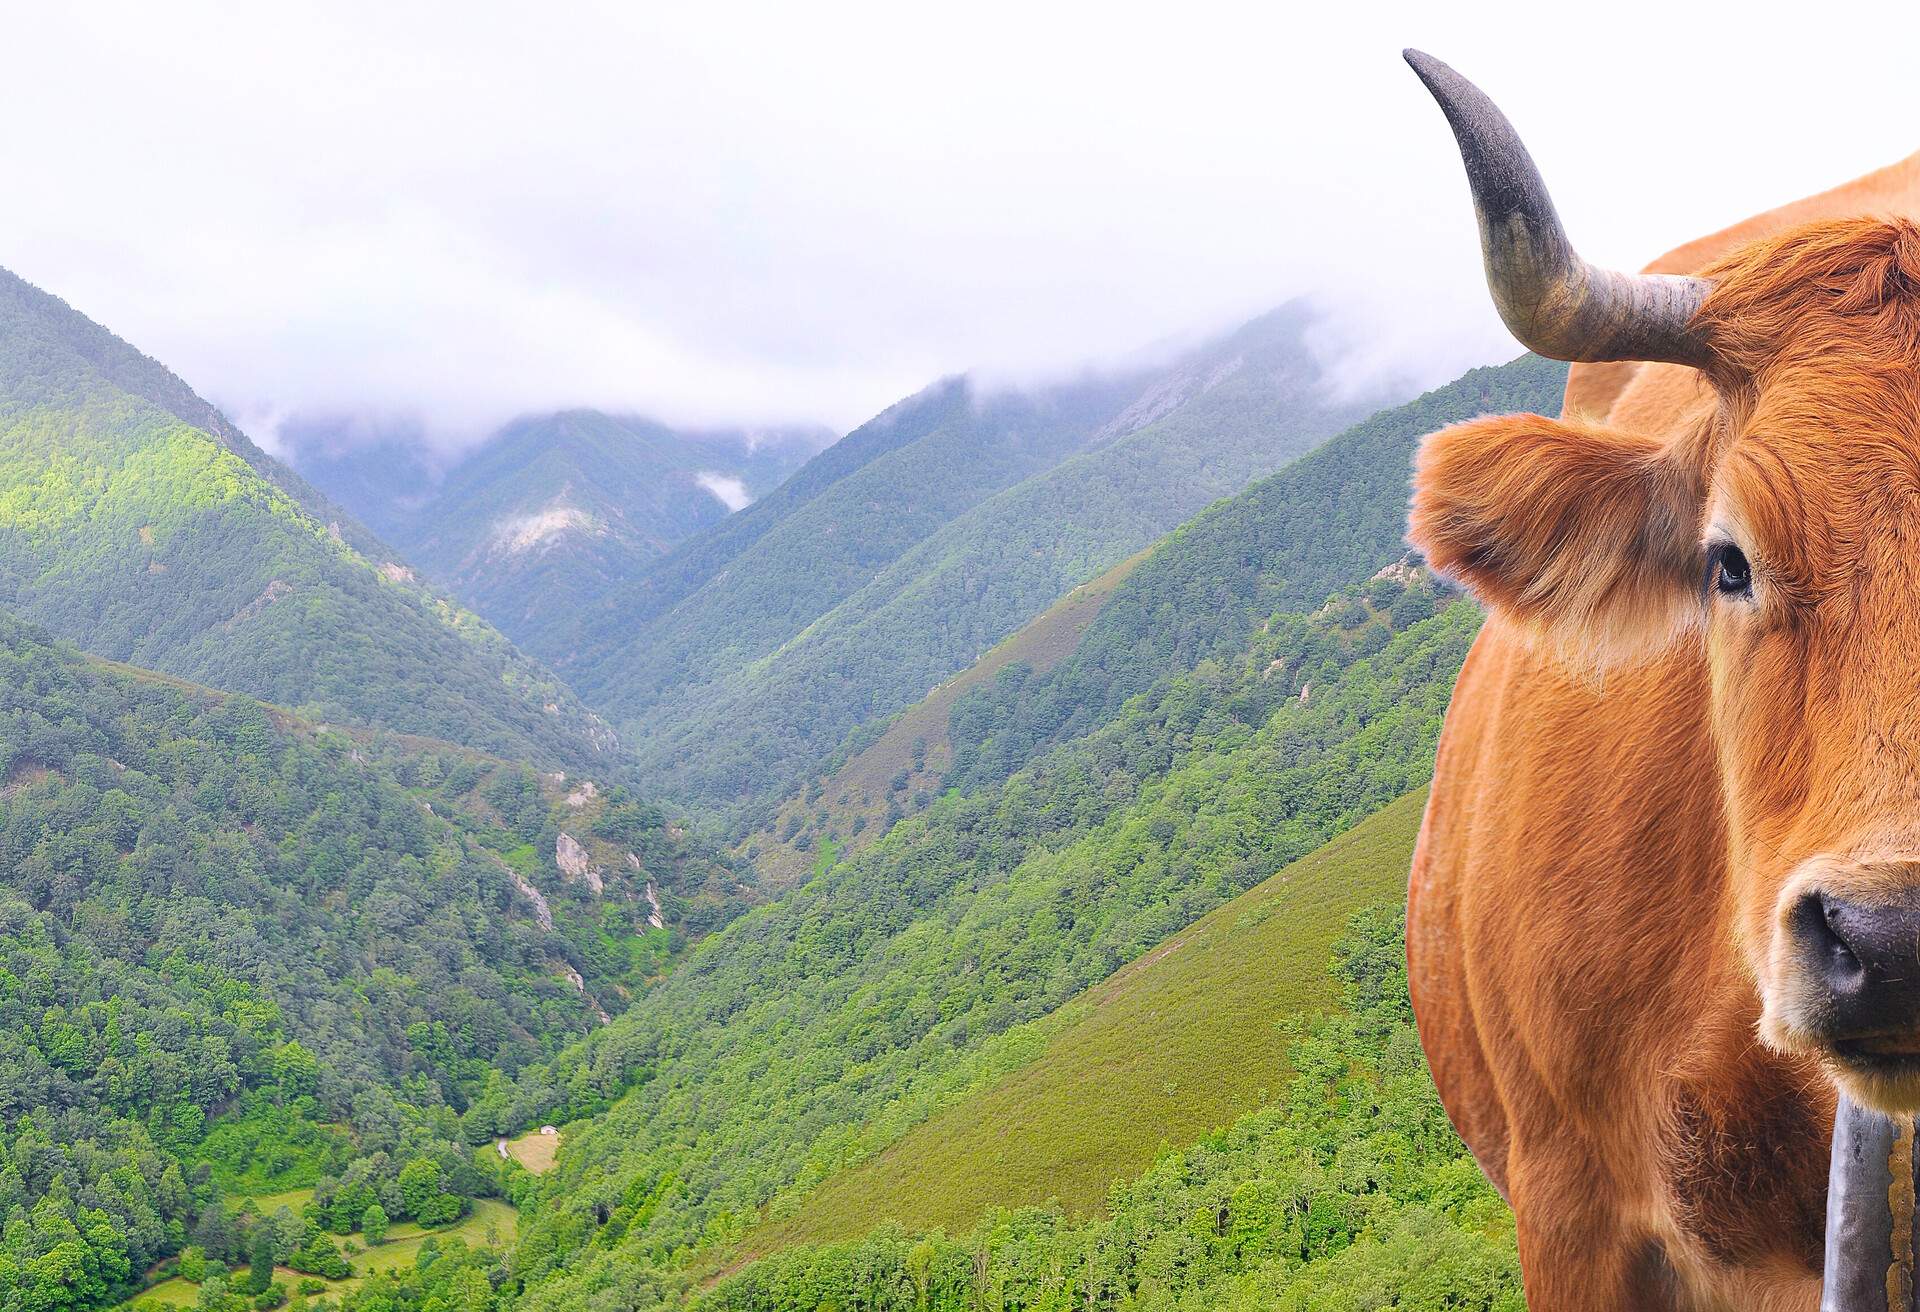 Cow in Muniellos forest in Asturias, Spain.